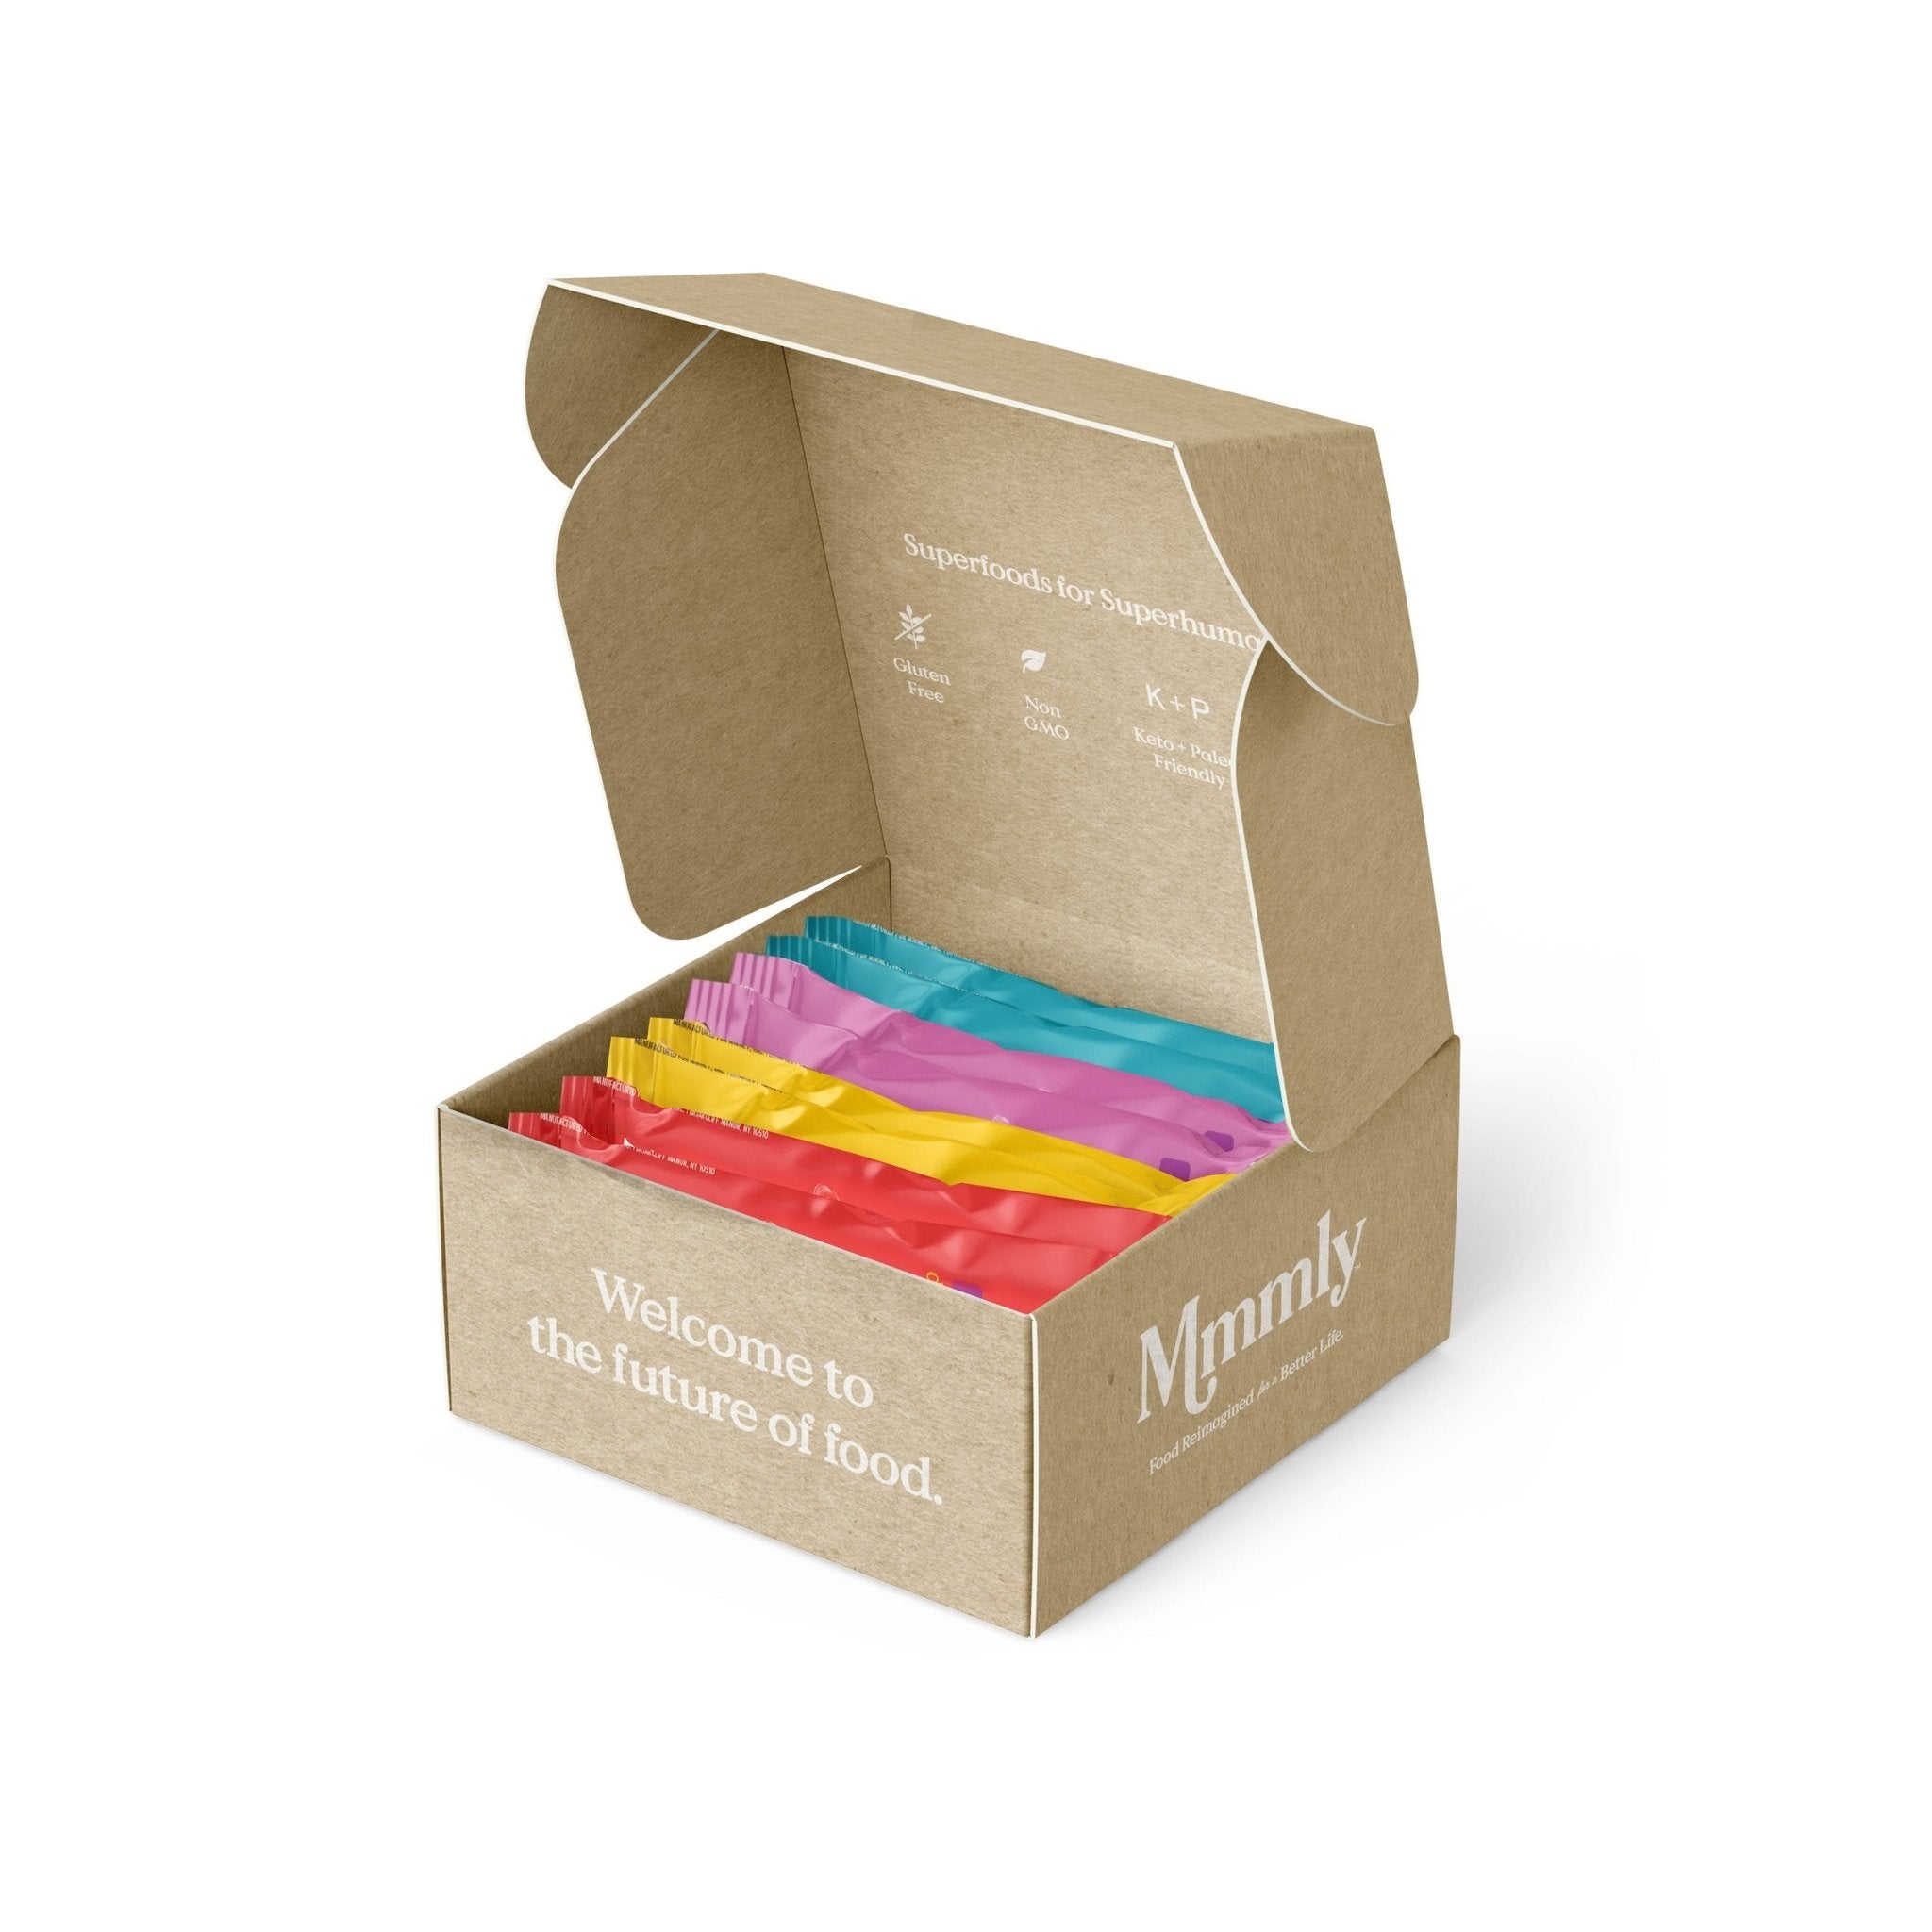 Soft Cookies Sampler Pack - Mmmly - Consumerhaus